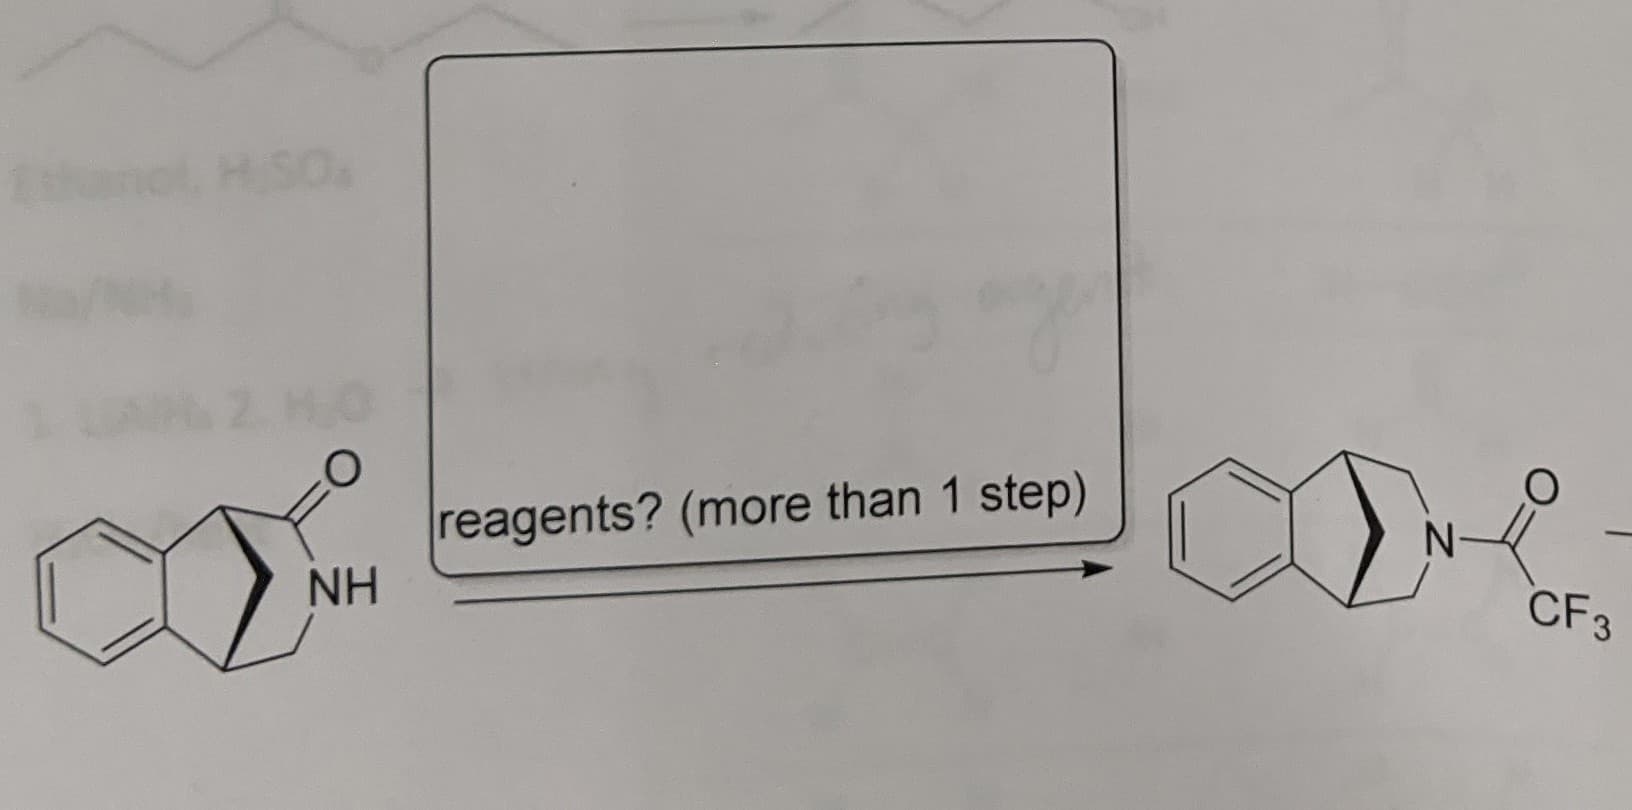 reagents? (more than 1 step)
CF3
NH
